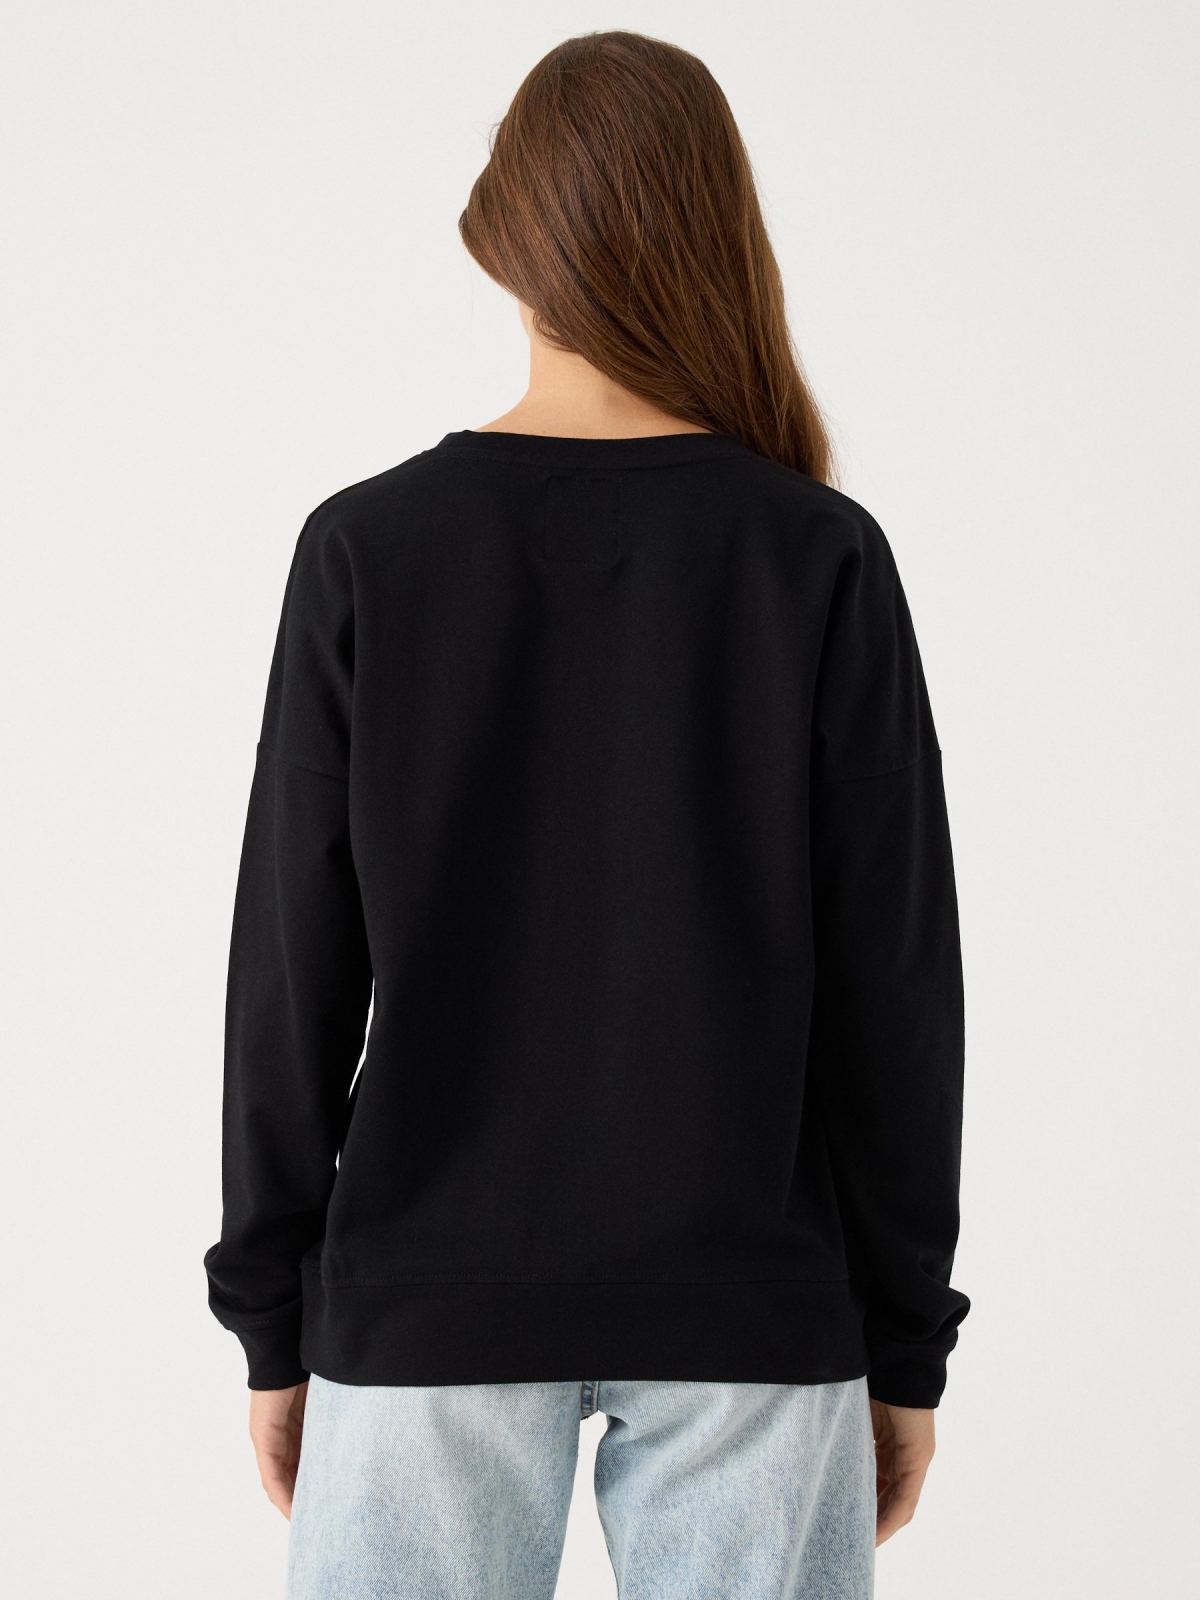 Sweatshirt básica preto vista meia traseira